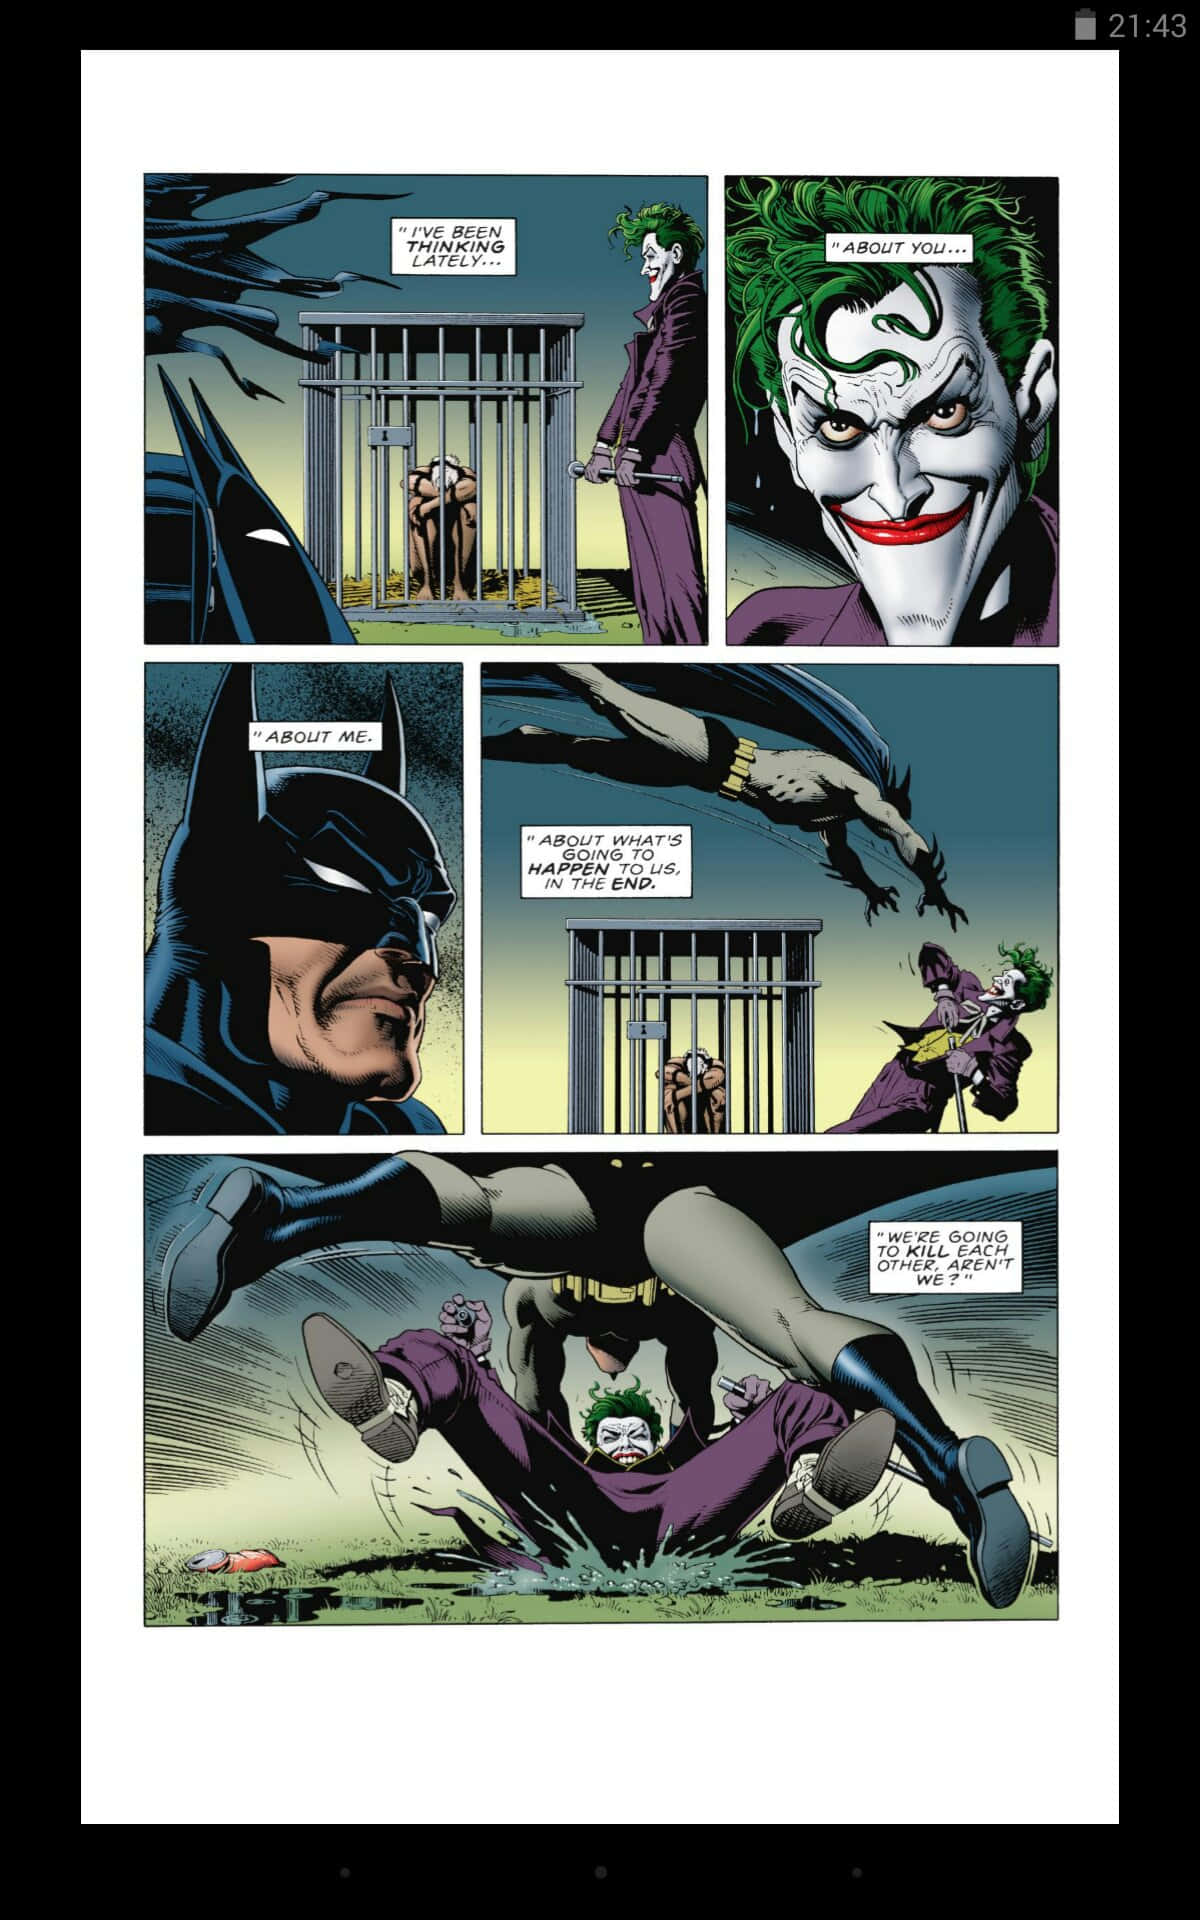 The infamous Joker scene from Batman: The Killing Joke Wallpaper